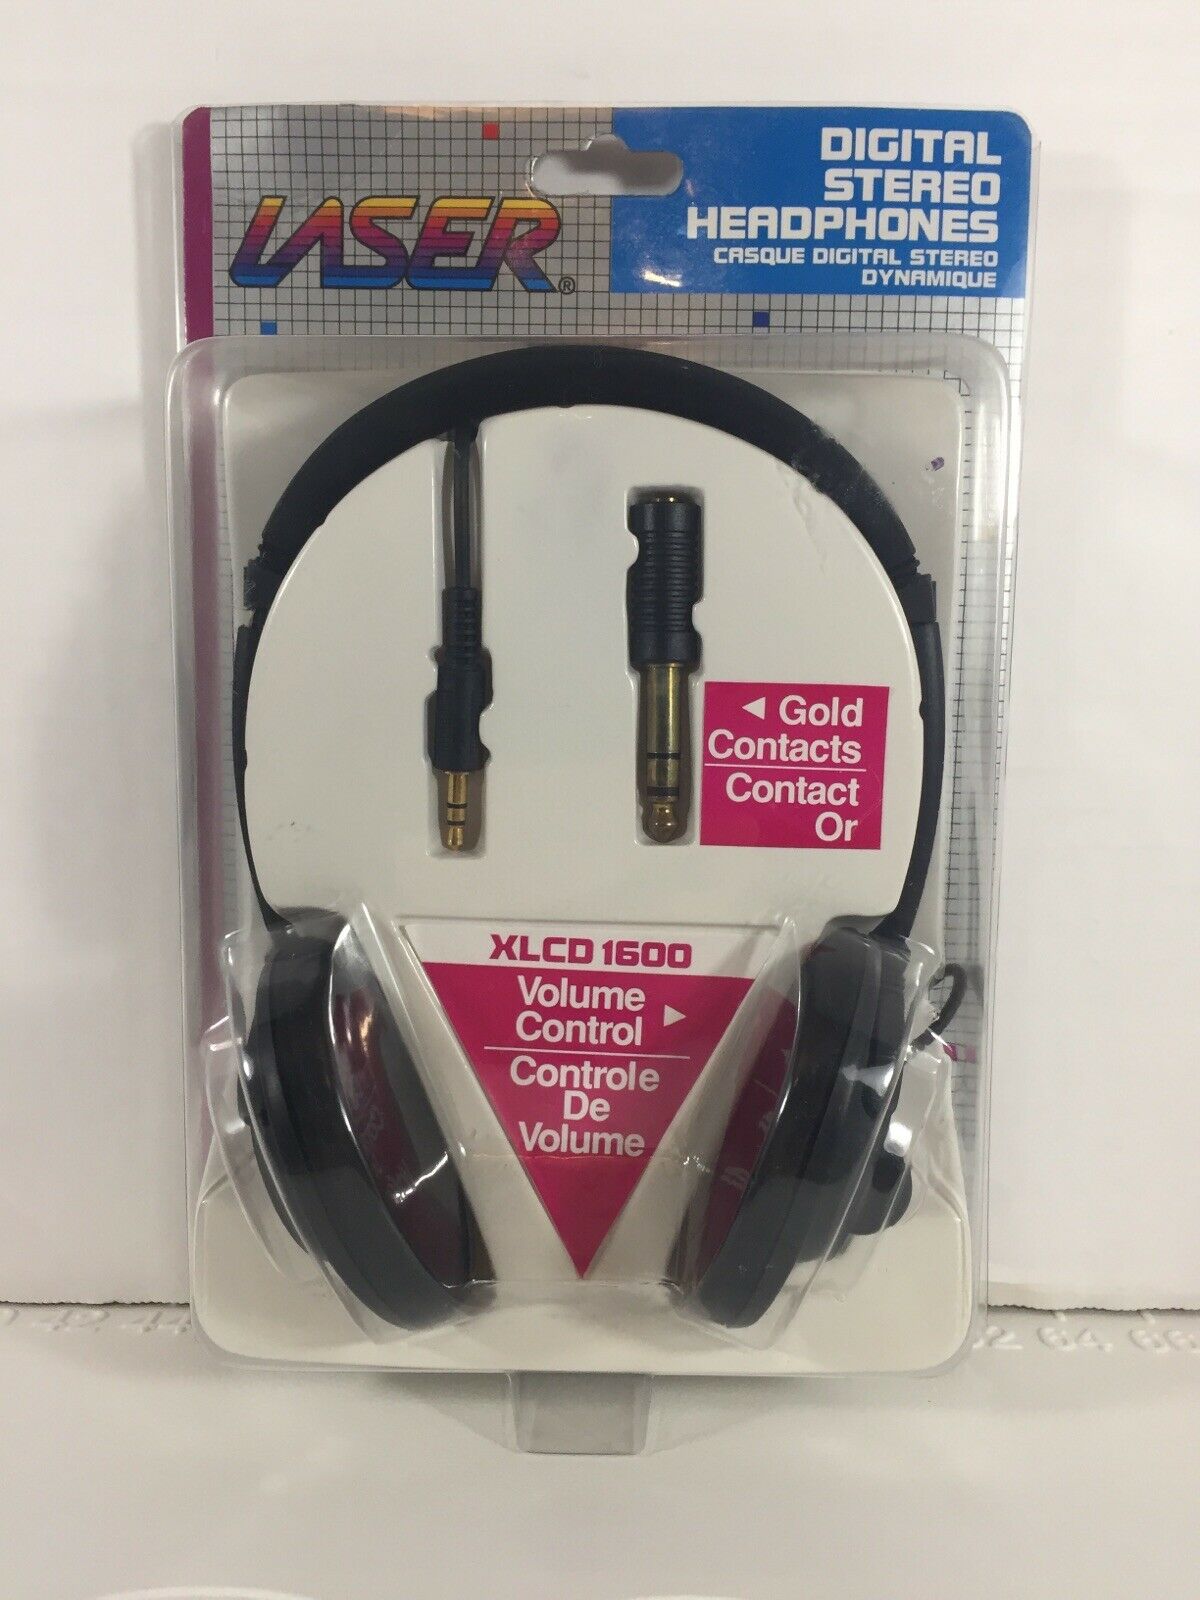 Vintage Swire Magnetics Laser Digital Stero Headphones Xl1600 NOS 1991 XLCD 1600